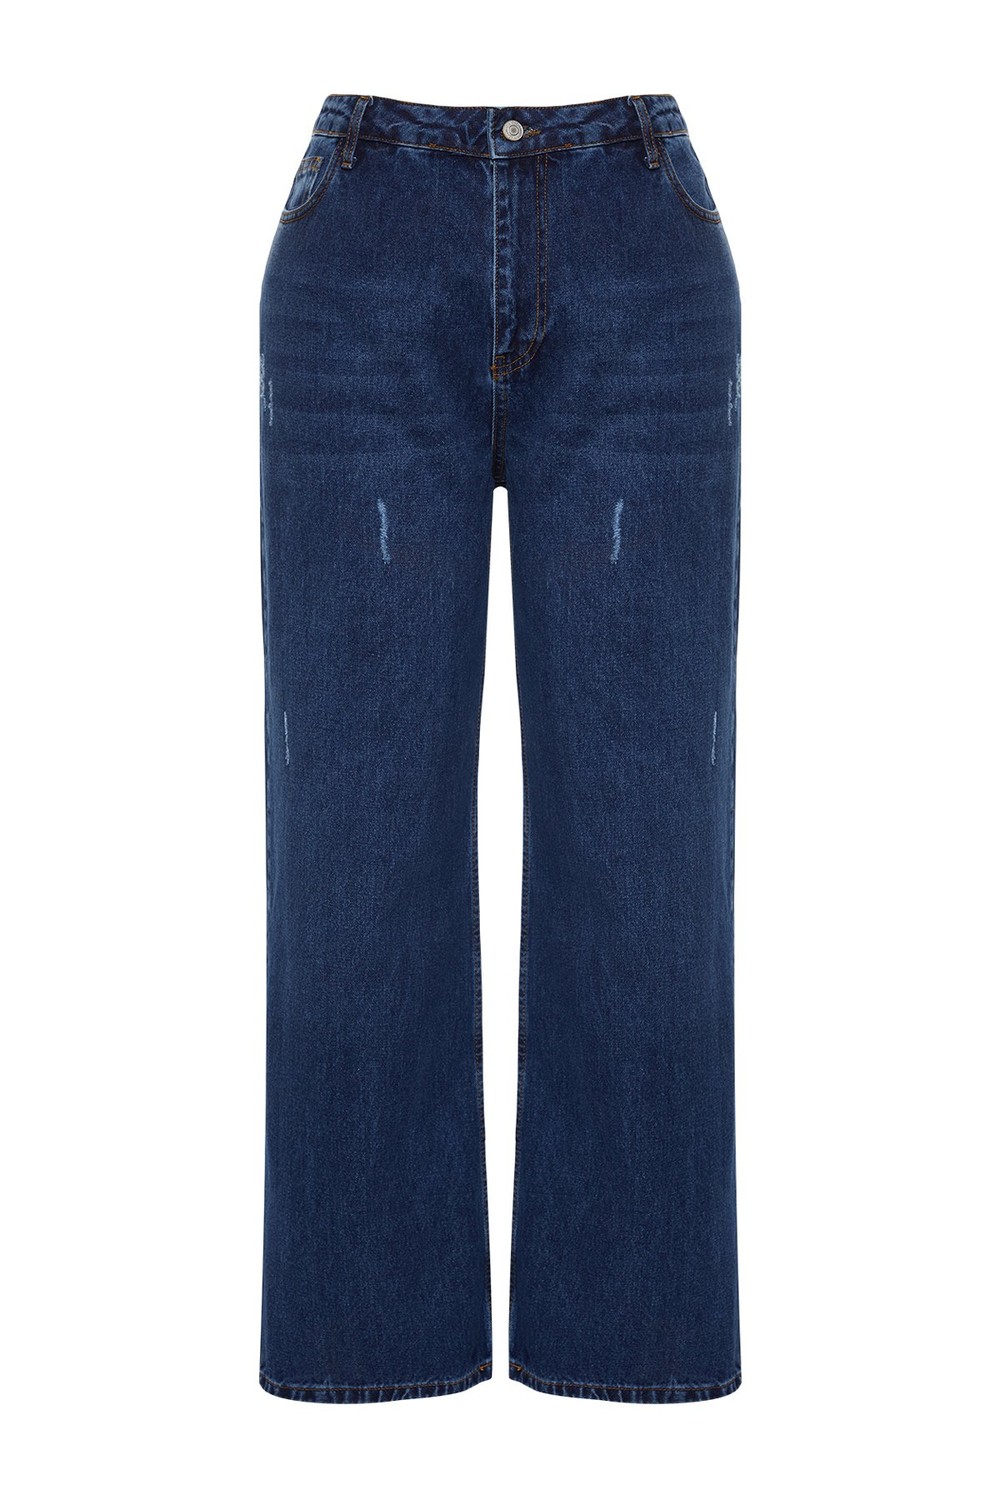 Trendyol Curve Dark Blue High Waist Wide Cut Jeans